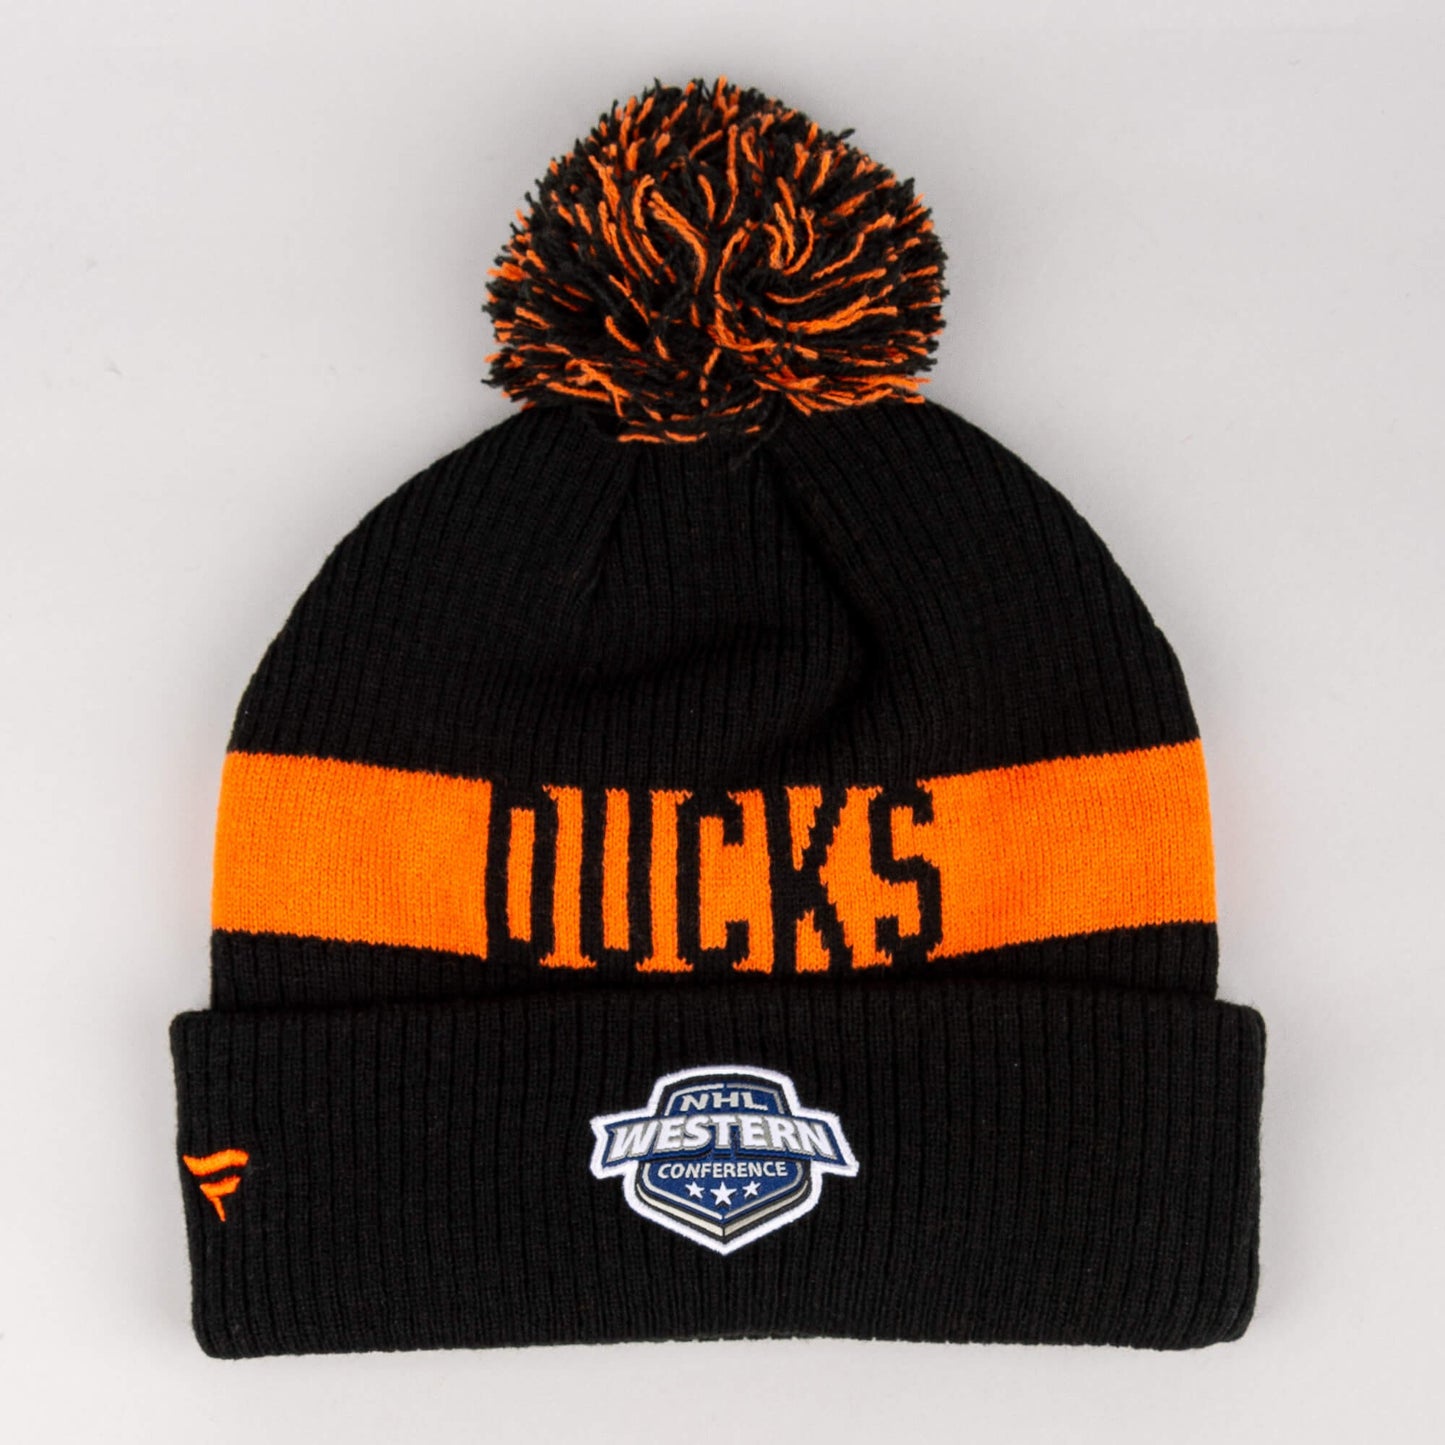 Fanatics NHL Fundamental Beanie Cuff with Pom Anaheim Ducks Black/Dark Orange